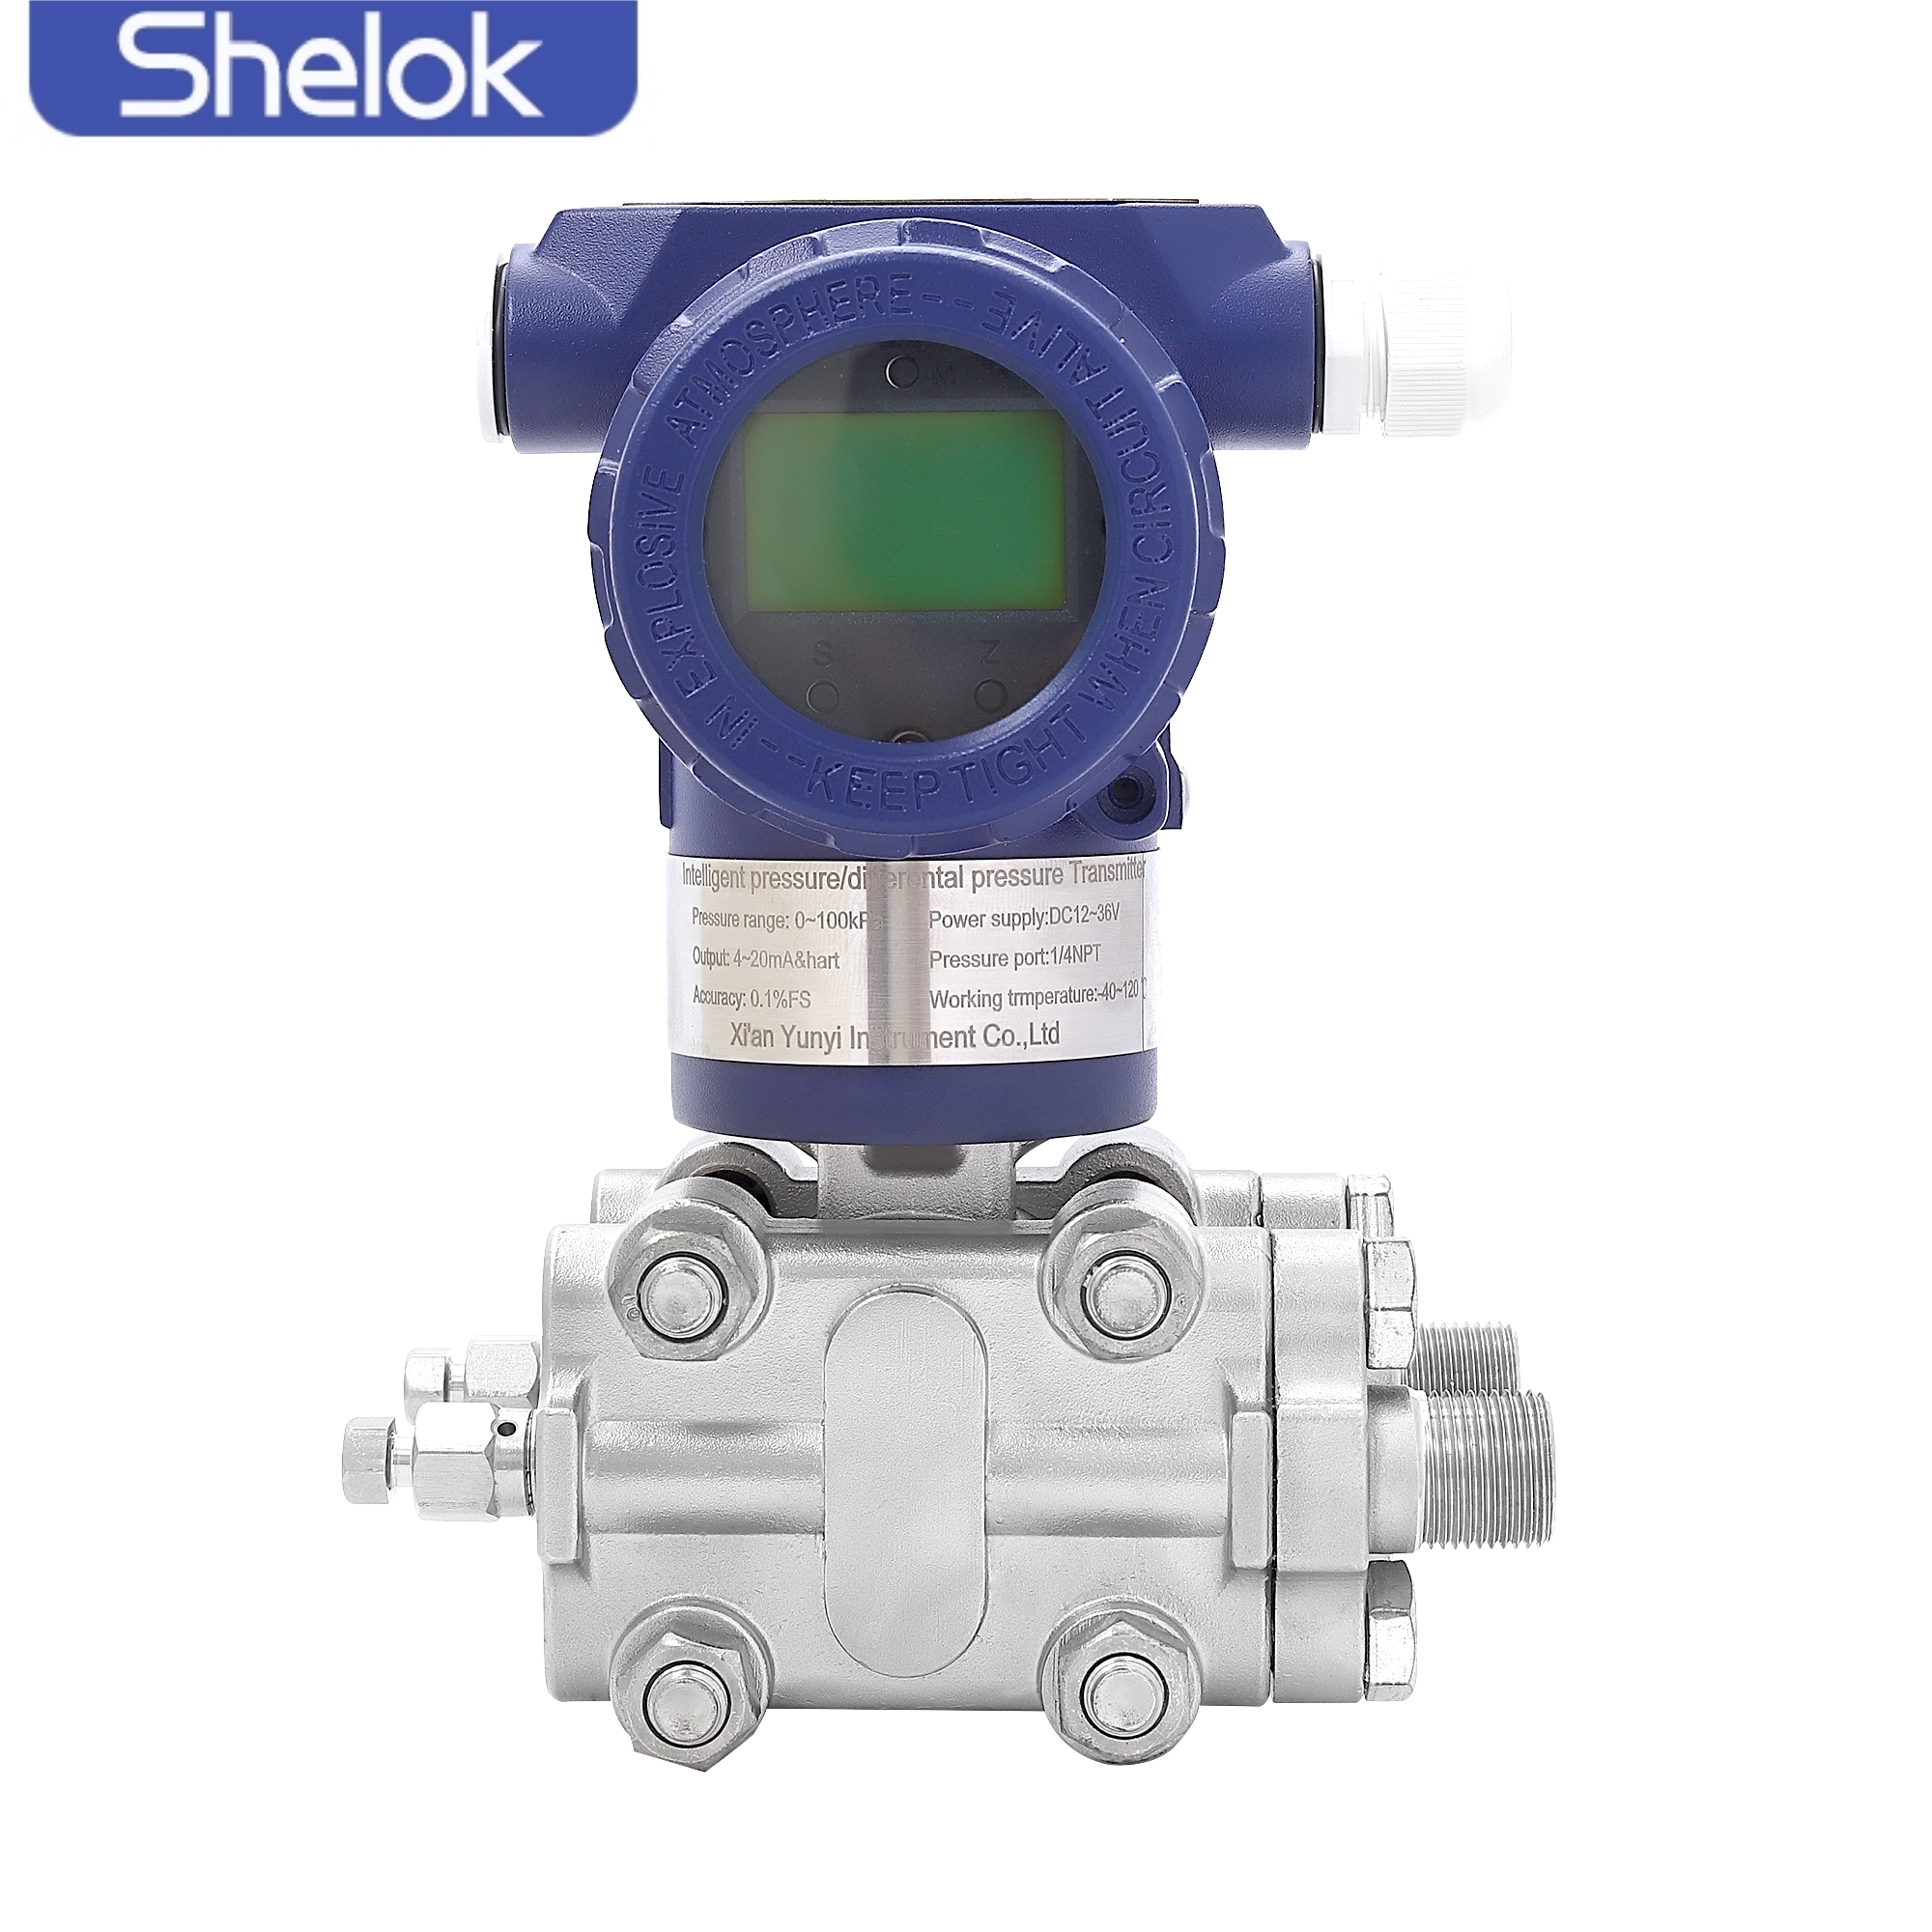 Shelok capacitivemonocrystalline silicon differential pressure sensor